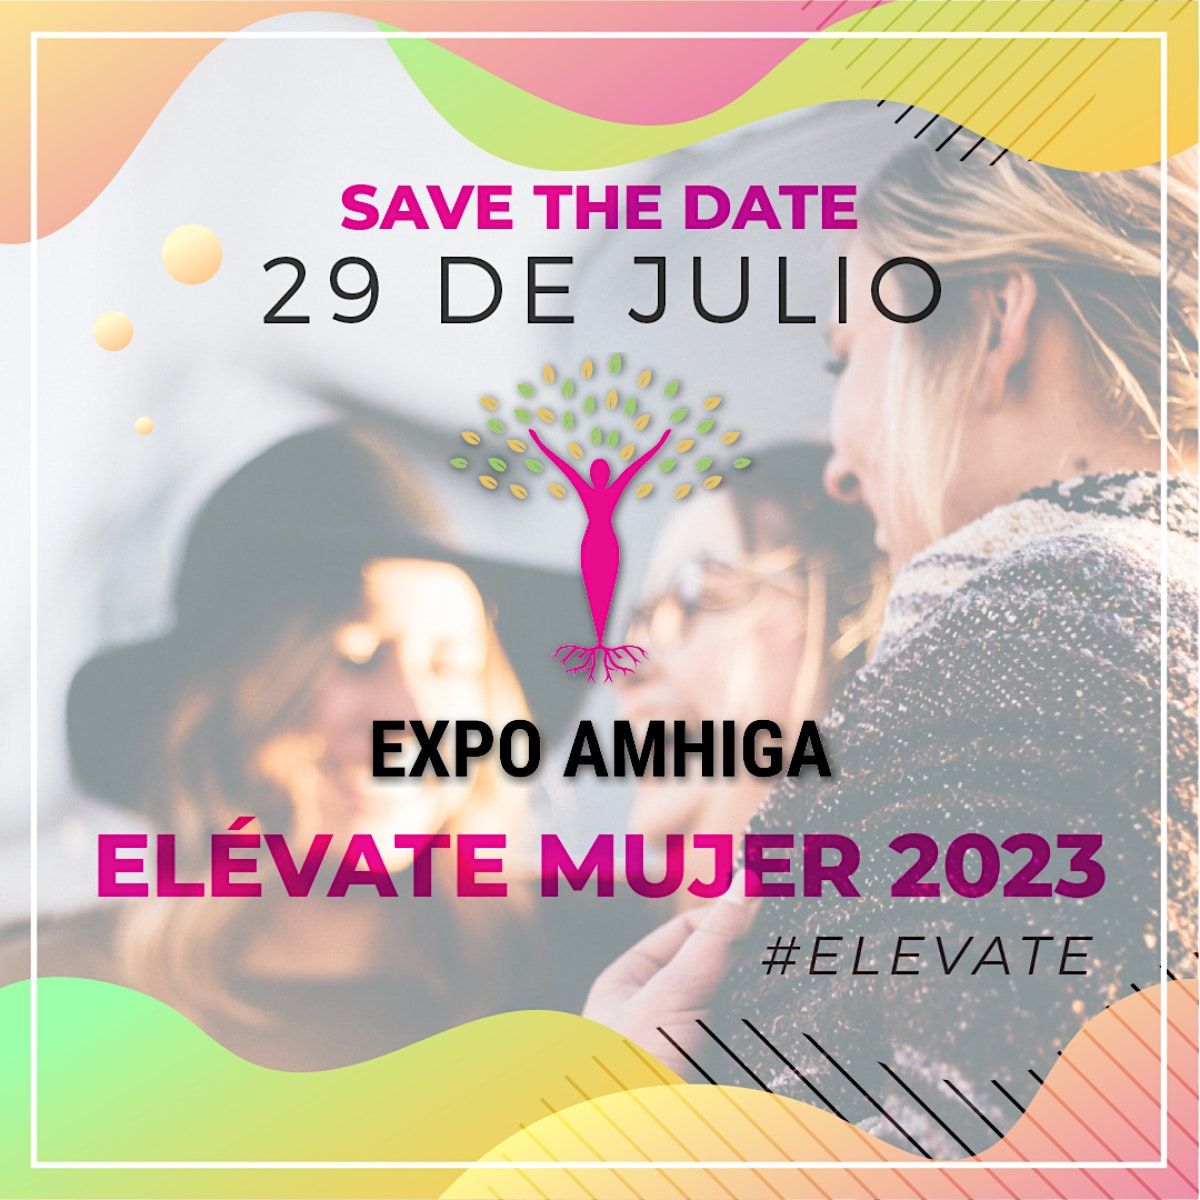 Expo Amhiga 2023